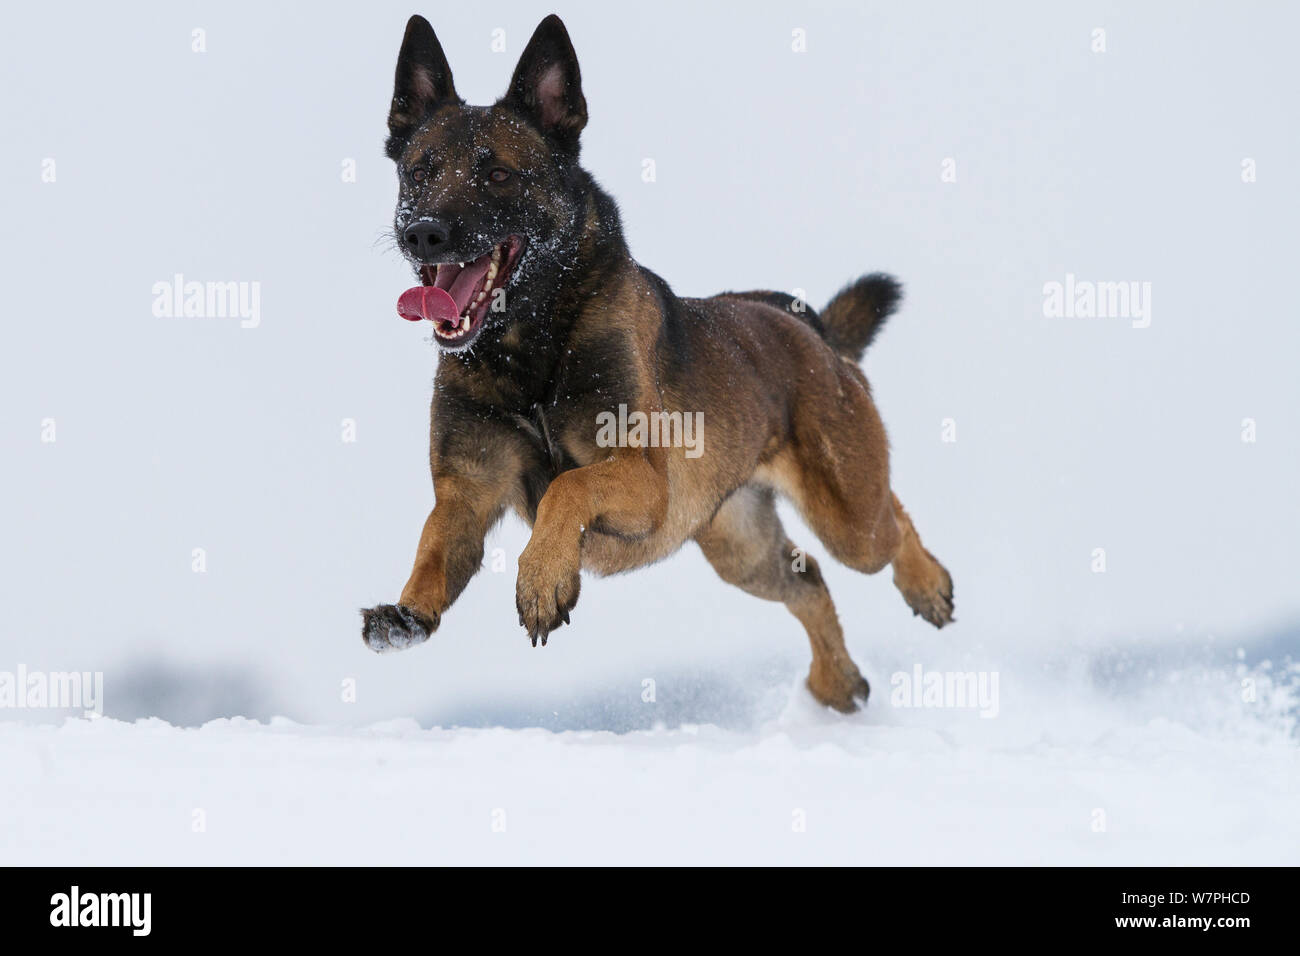 belgian shepherd police dog